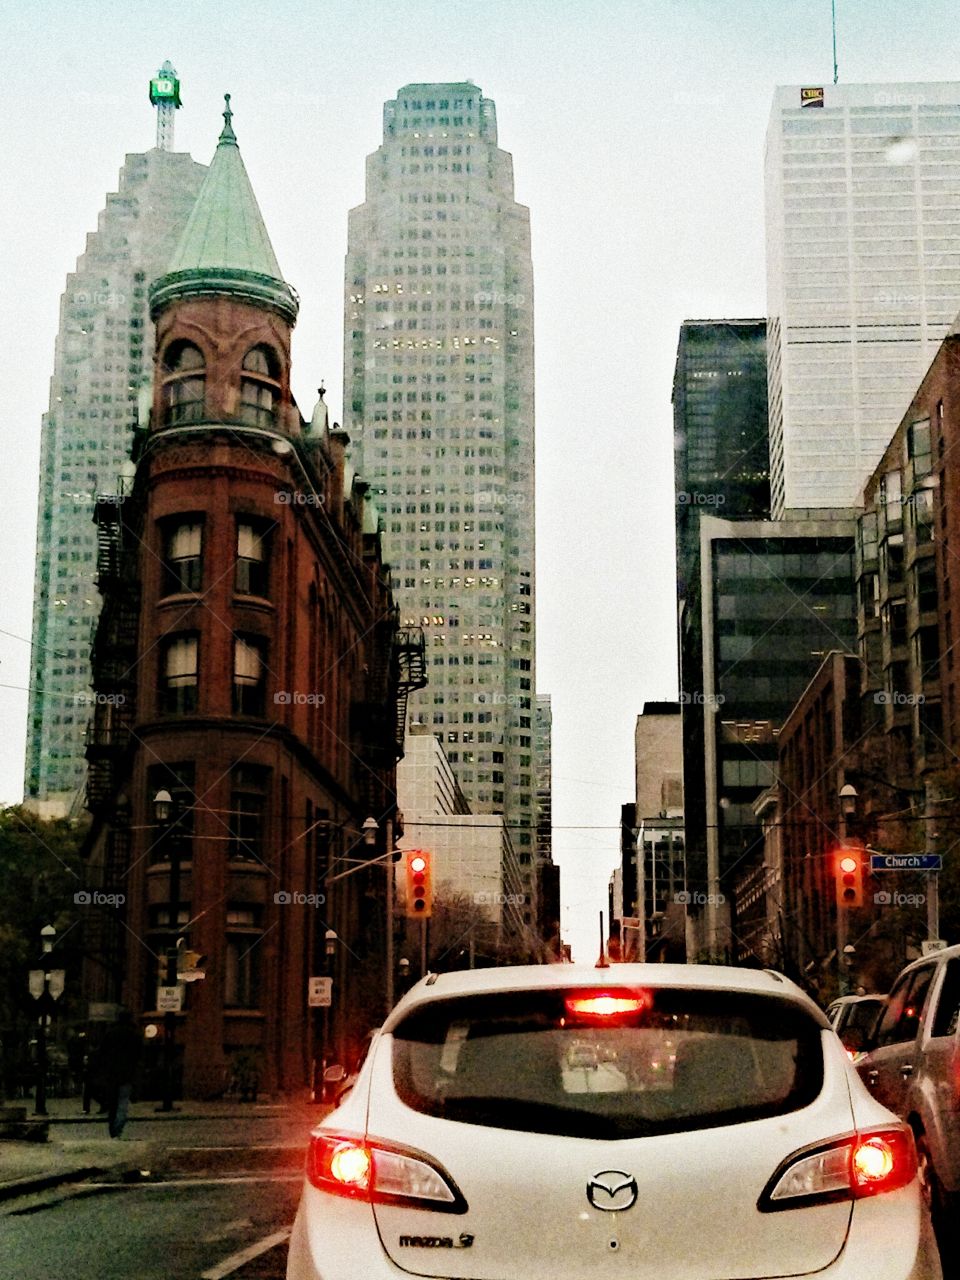 Giants. Urban driving, downtown Toronto.